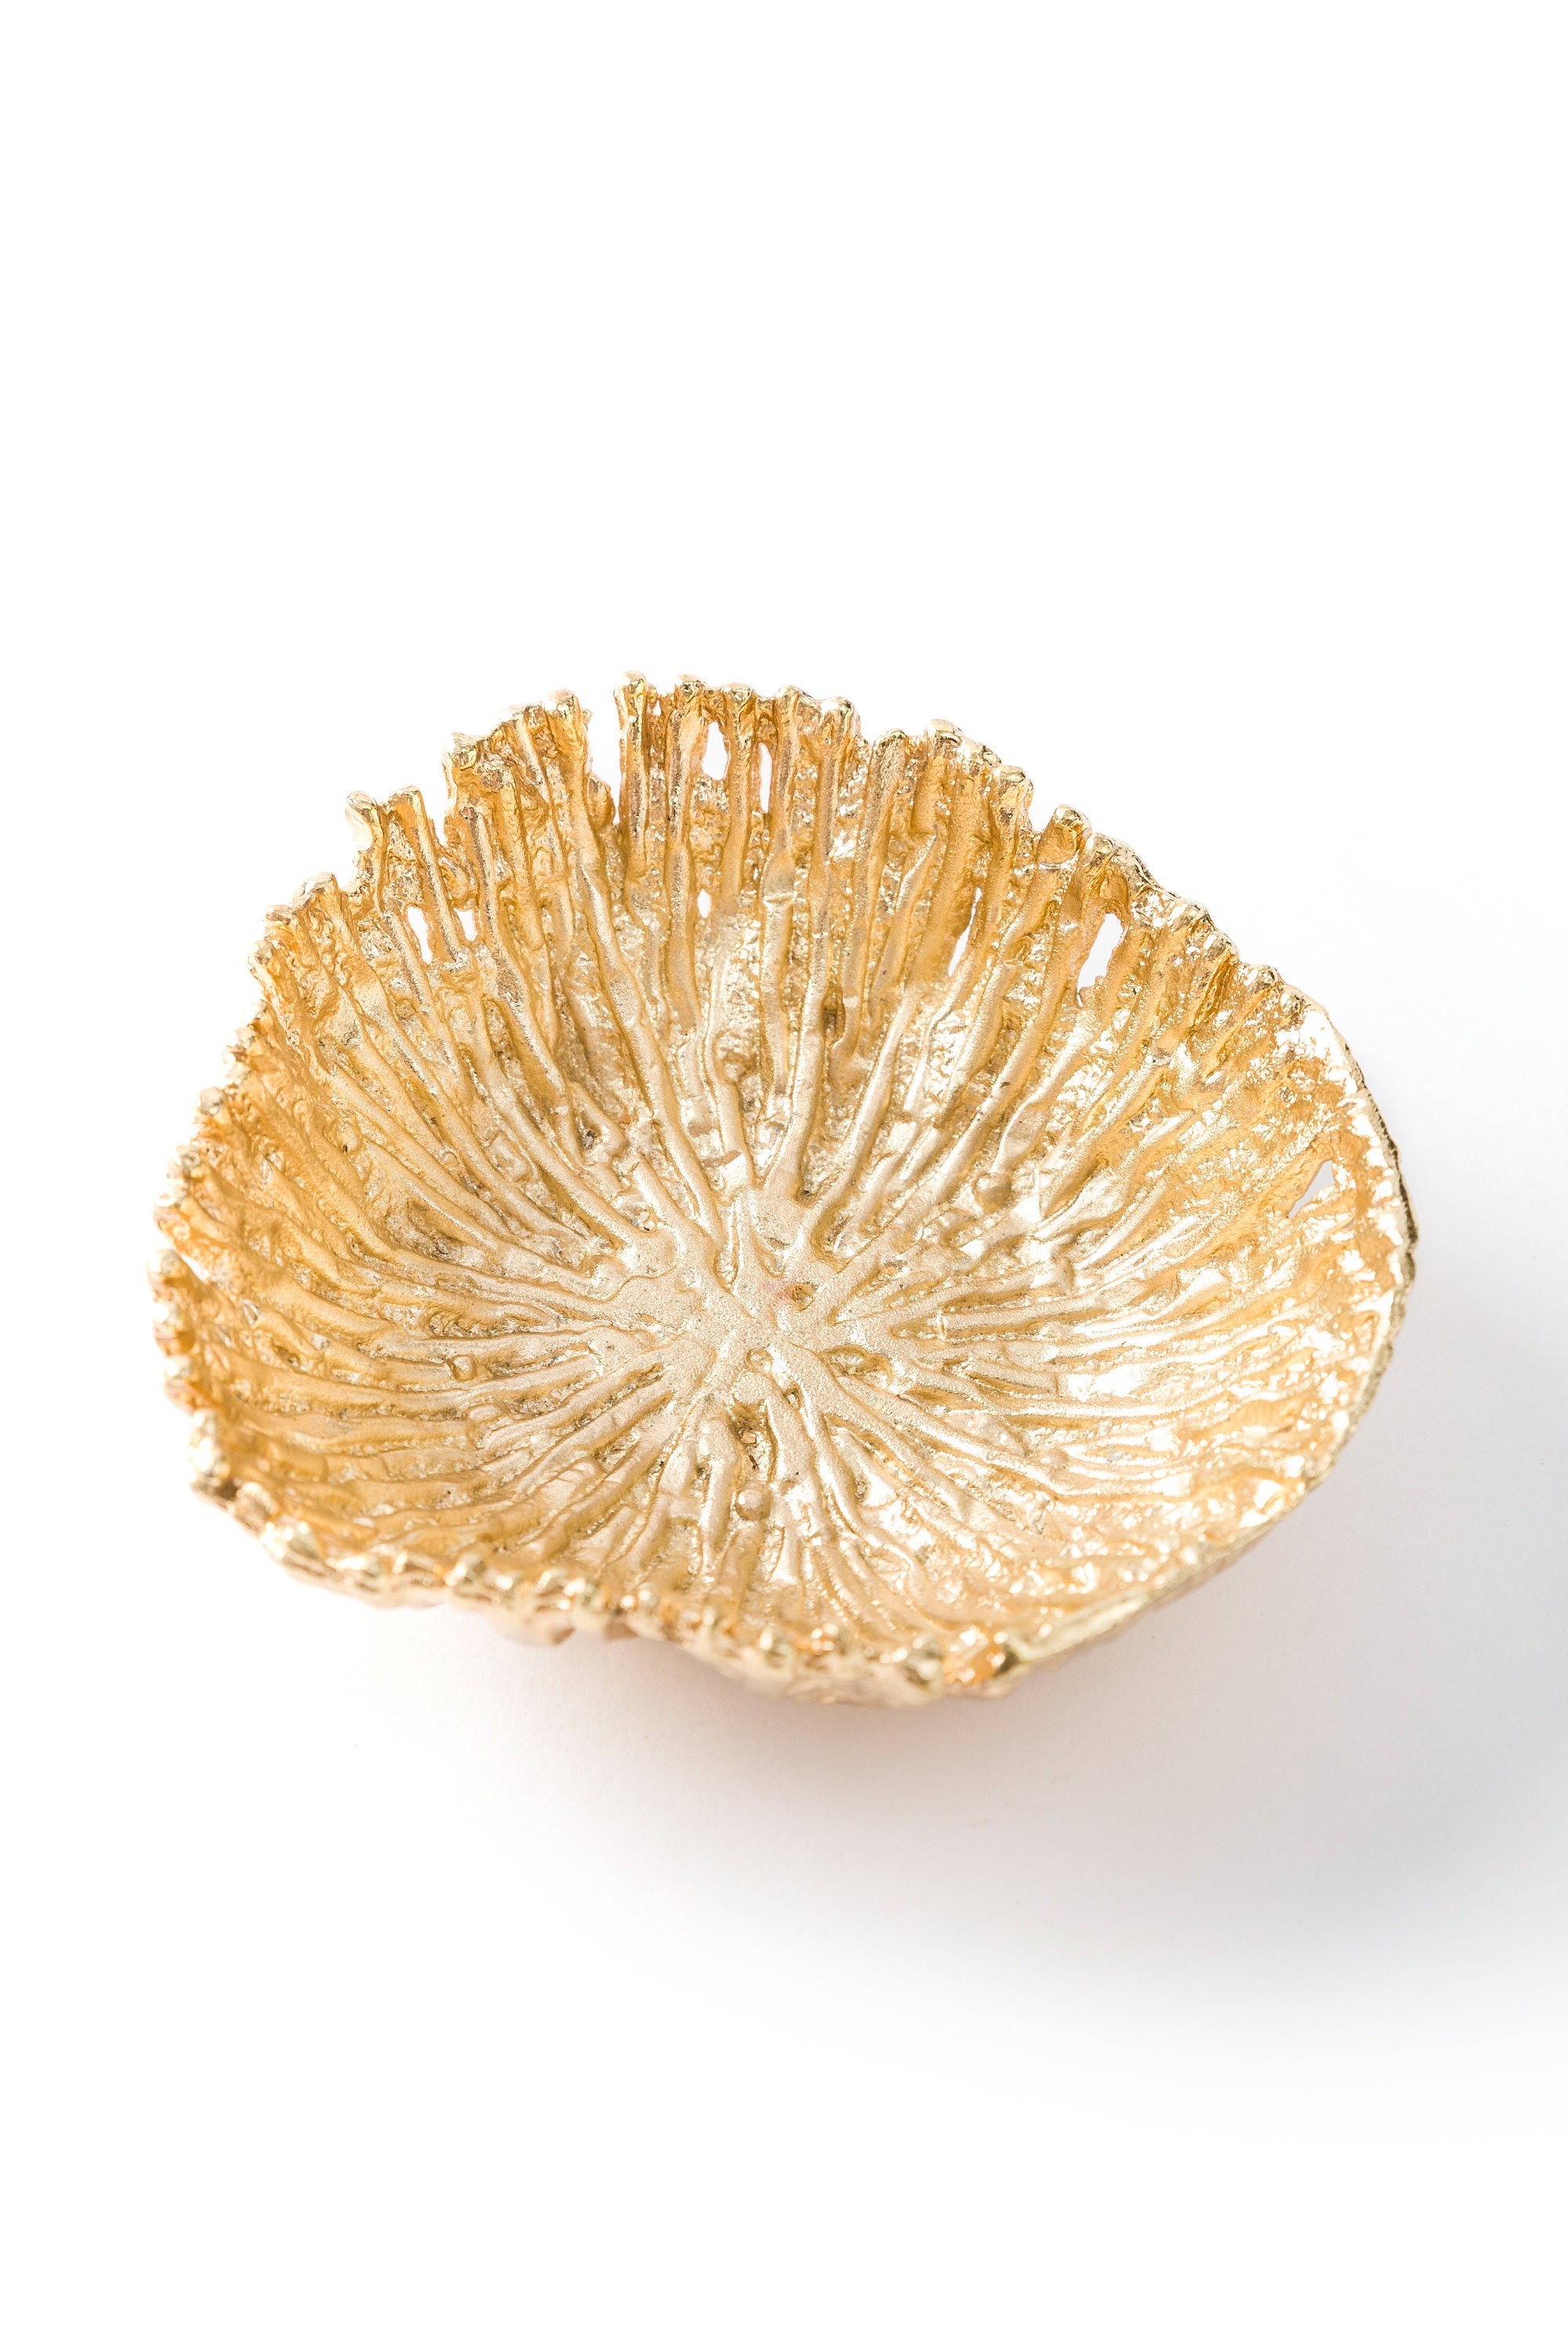 Heirloom Gold Serving Bowls Organic Shape Nut Bowls for - Etsy